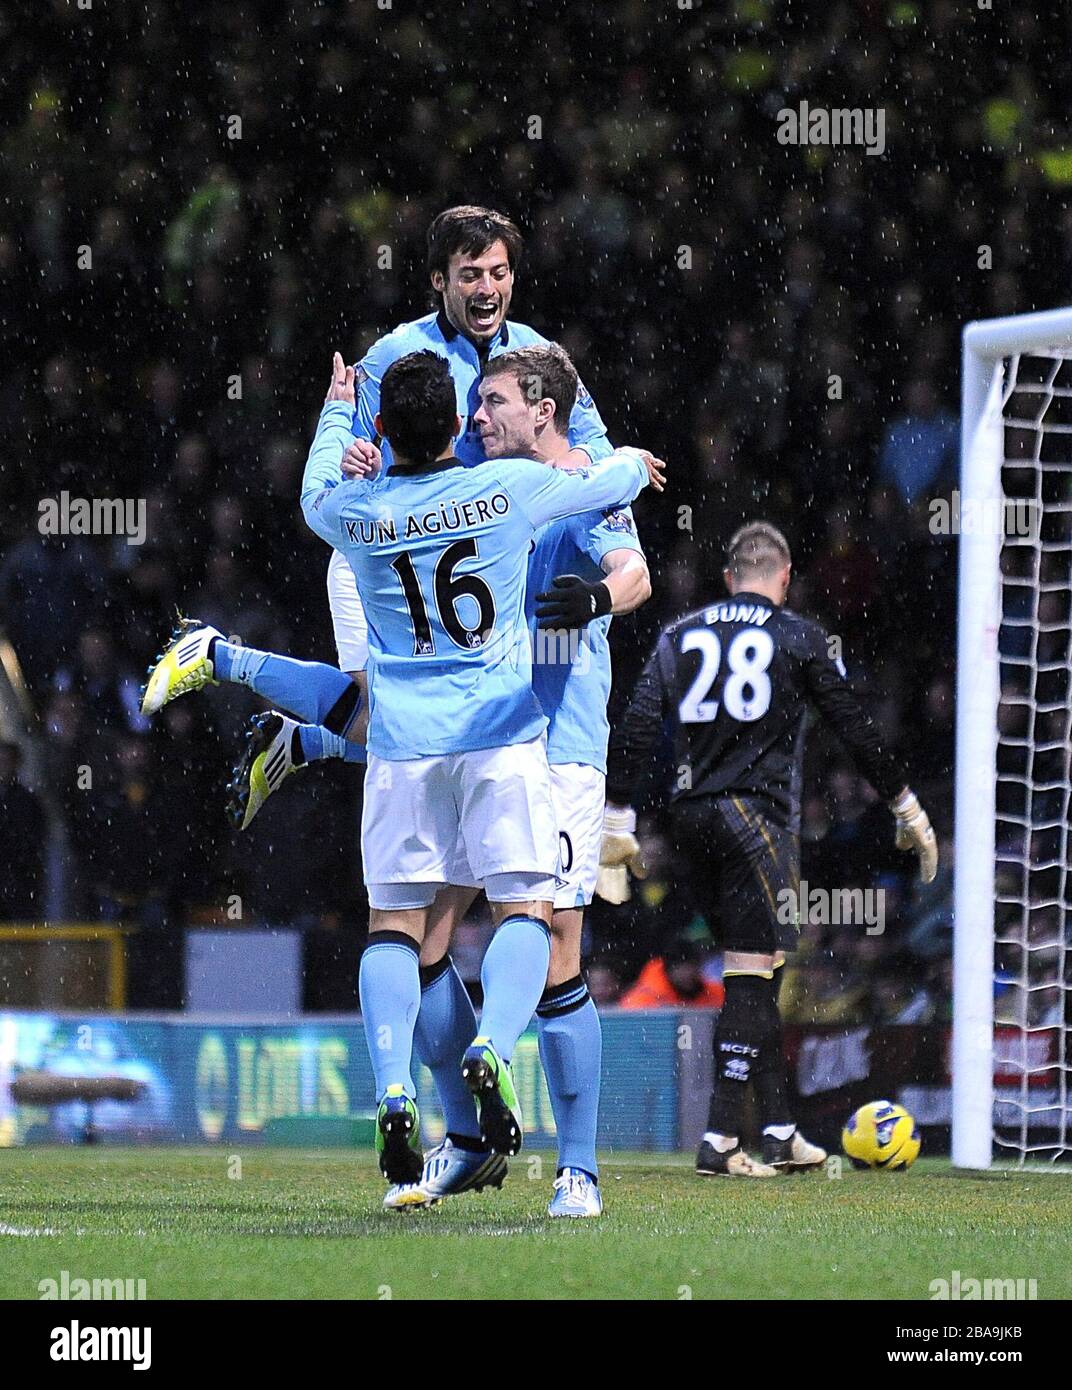 Manchester City's Edin Dzeko (right) celebrates with his team-mates Sergio Aguero (16) and David Silva (back) after scoring his team's opening goal Stock Photo